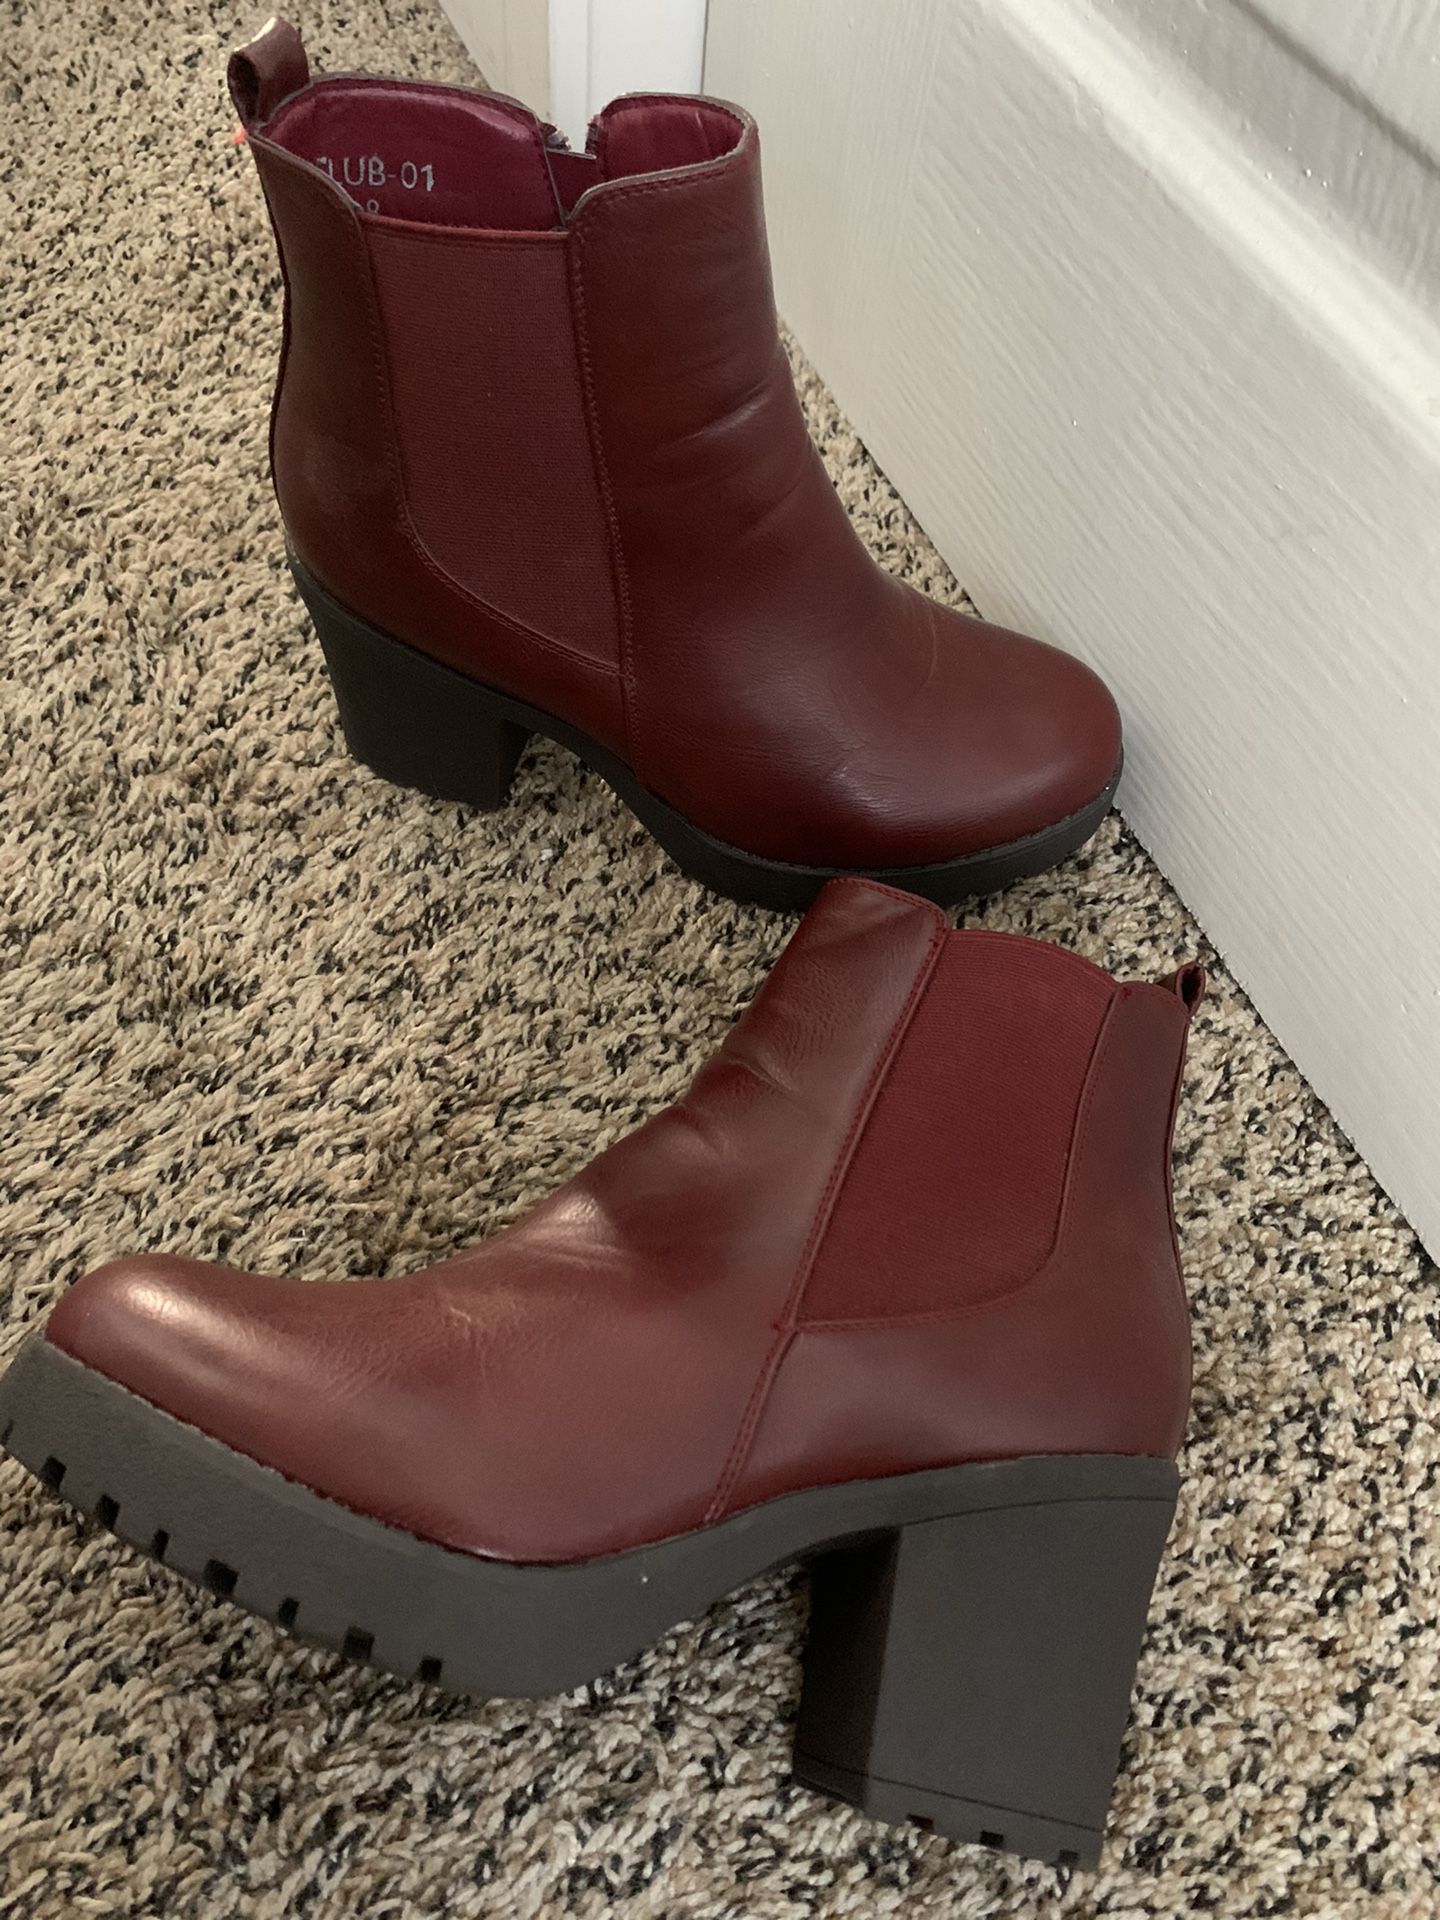 Chunky maroon boots